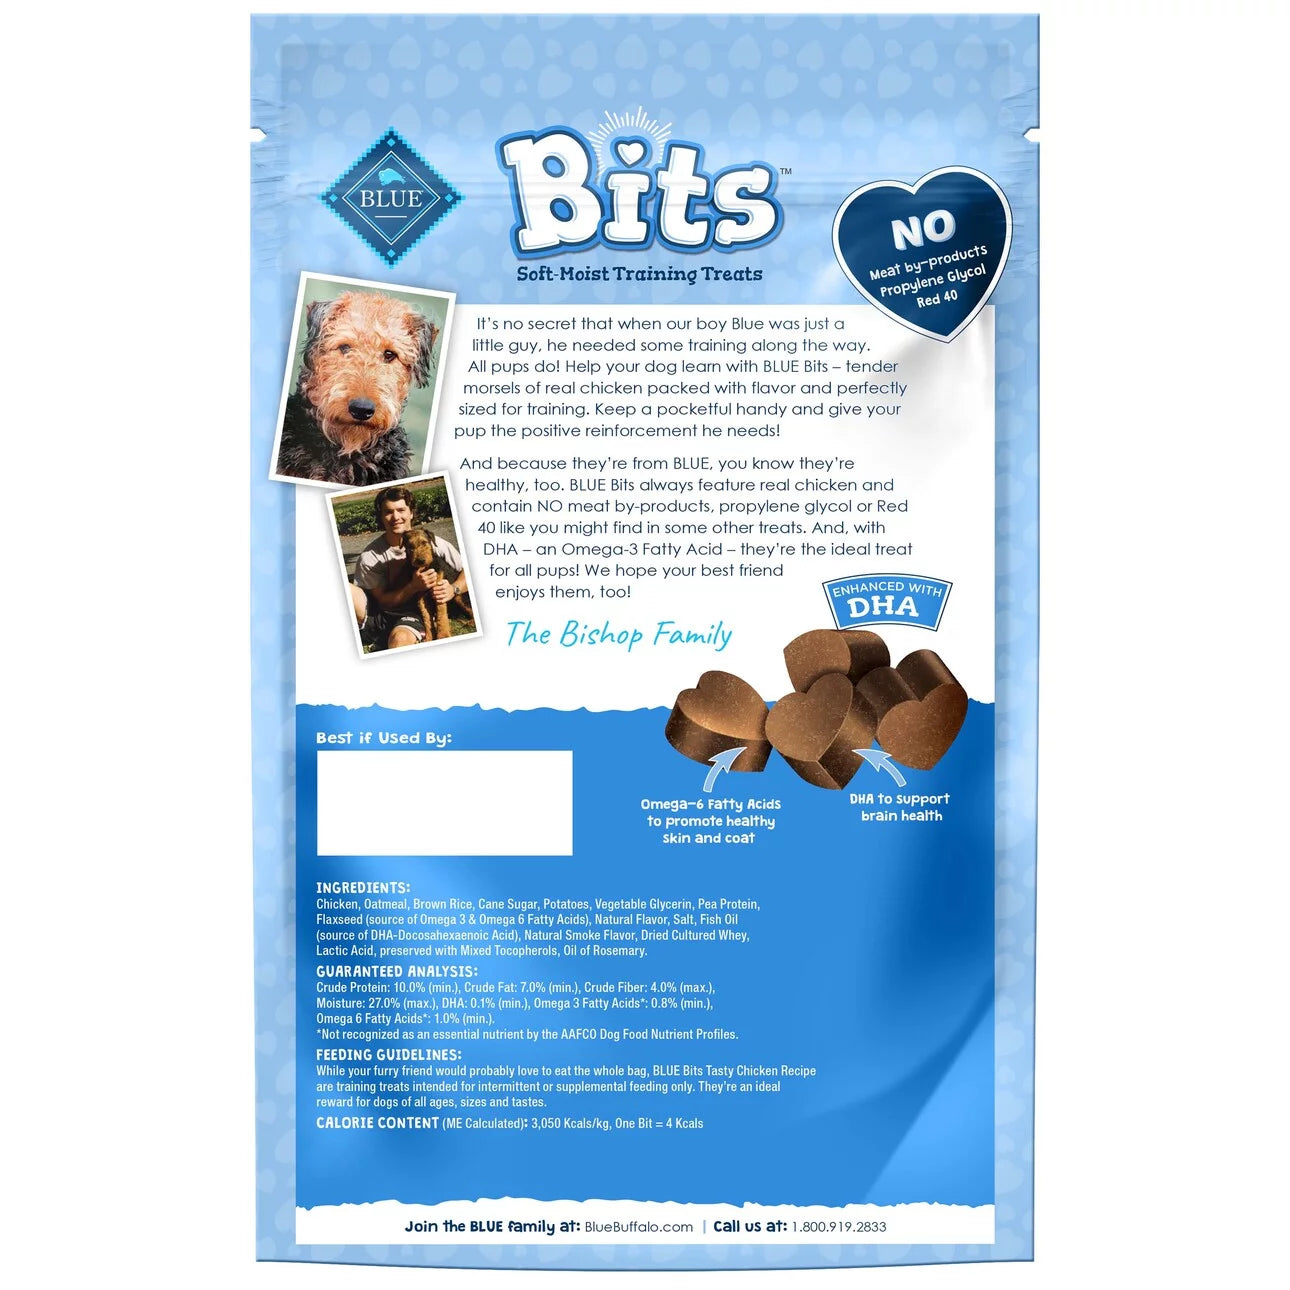 BLUE Bits Training Treats Chicken Flavor Soft Treats for Dogs, Whole Grain, 11 Oz. Bag